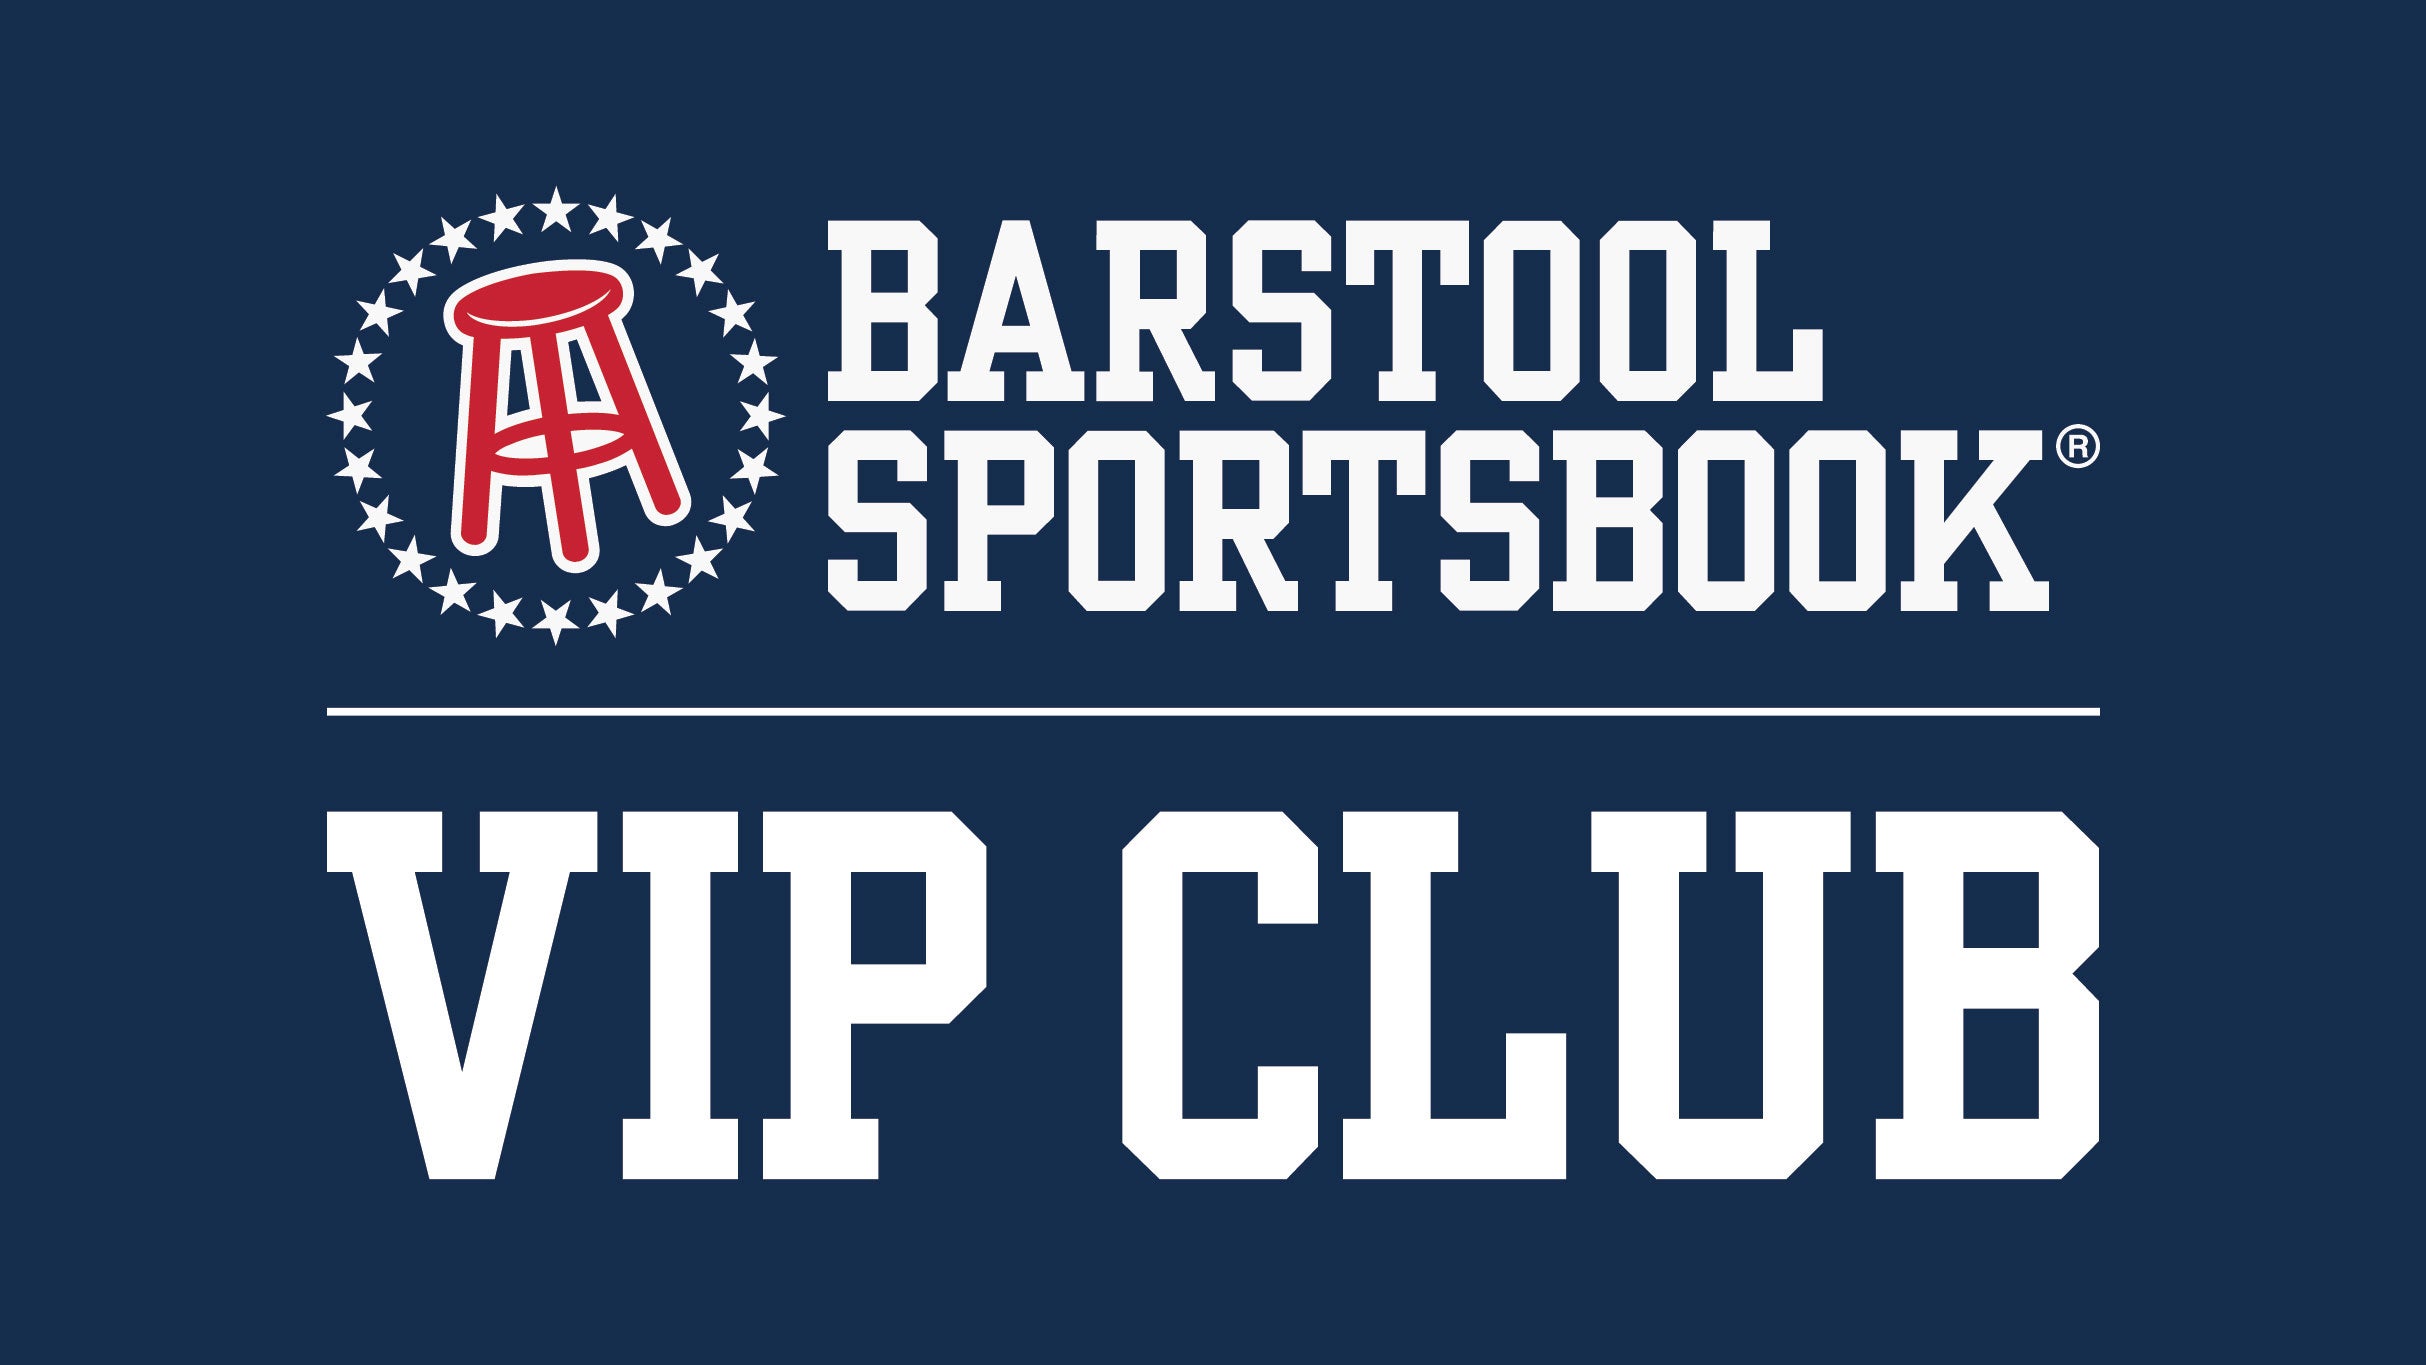 Barstool Sportsbook VIP Club presale information on freepresalepasswords.com